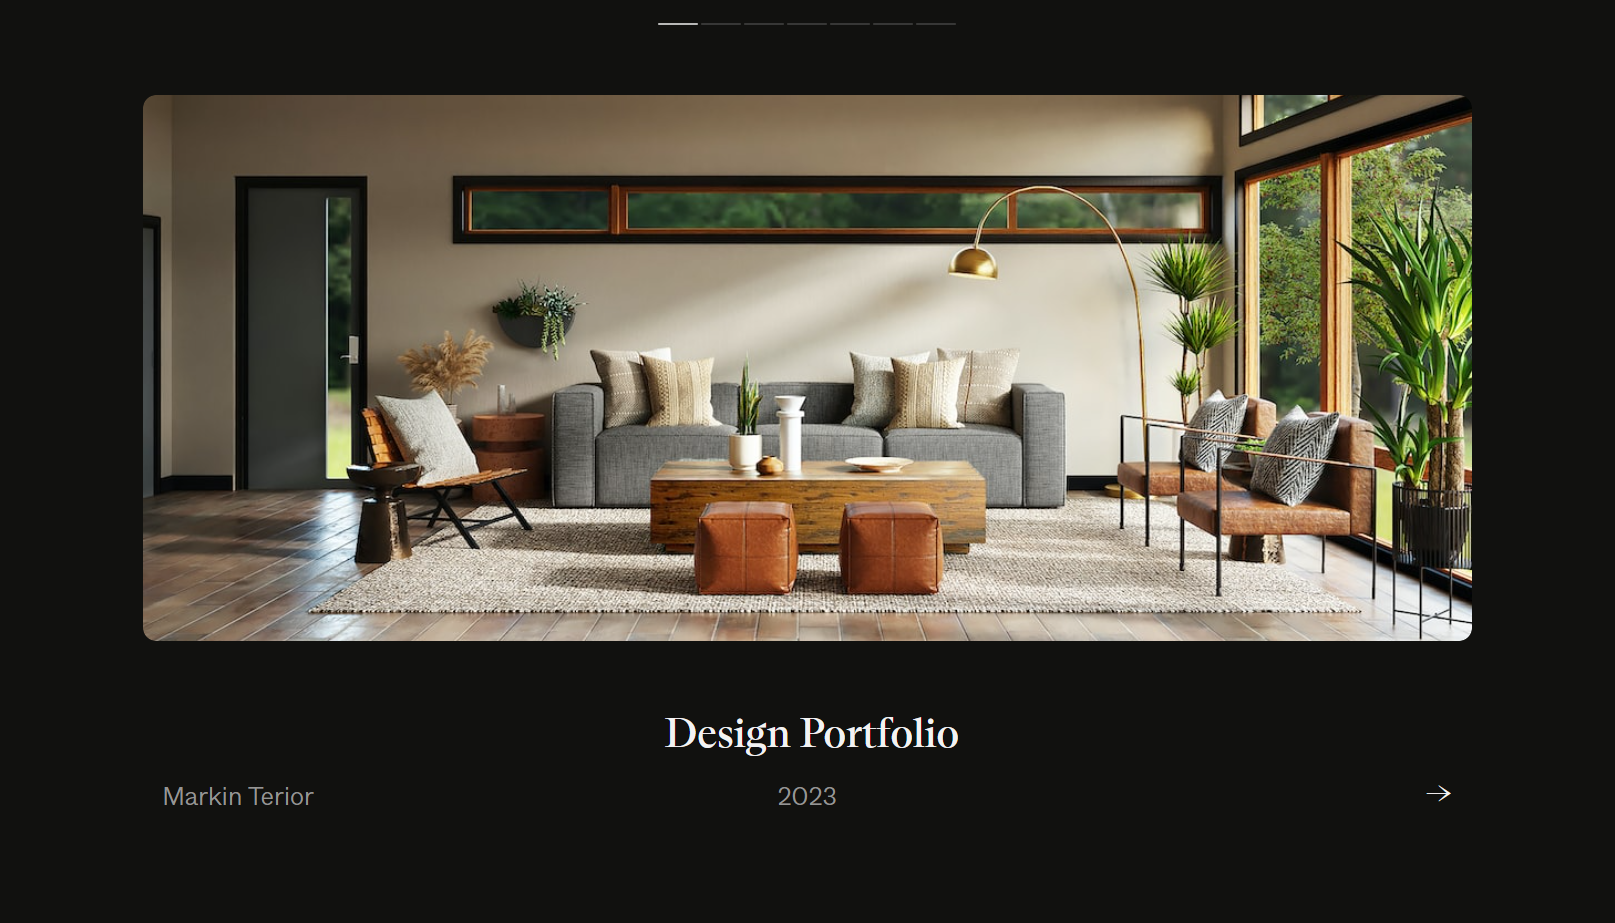 Interior Design Portfolio - Cover Page